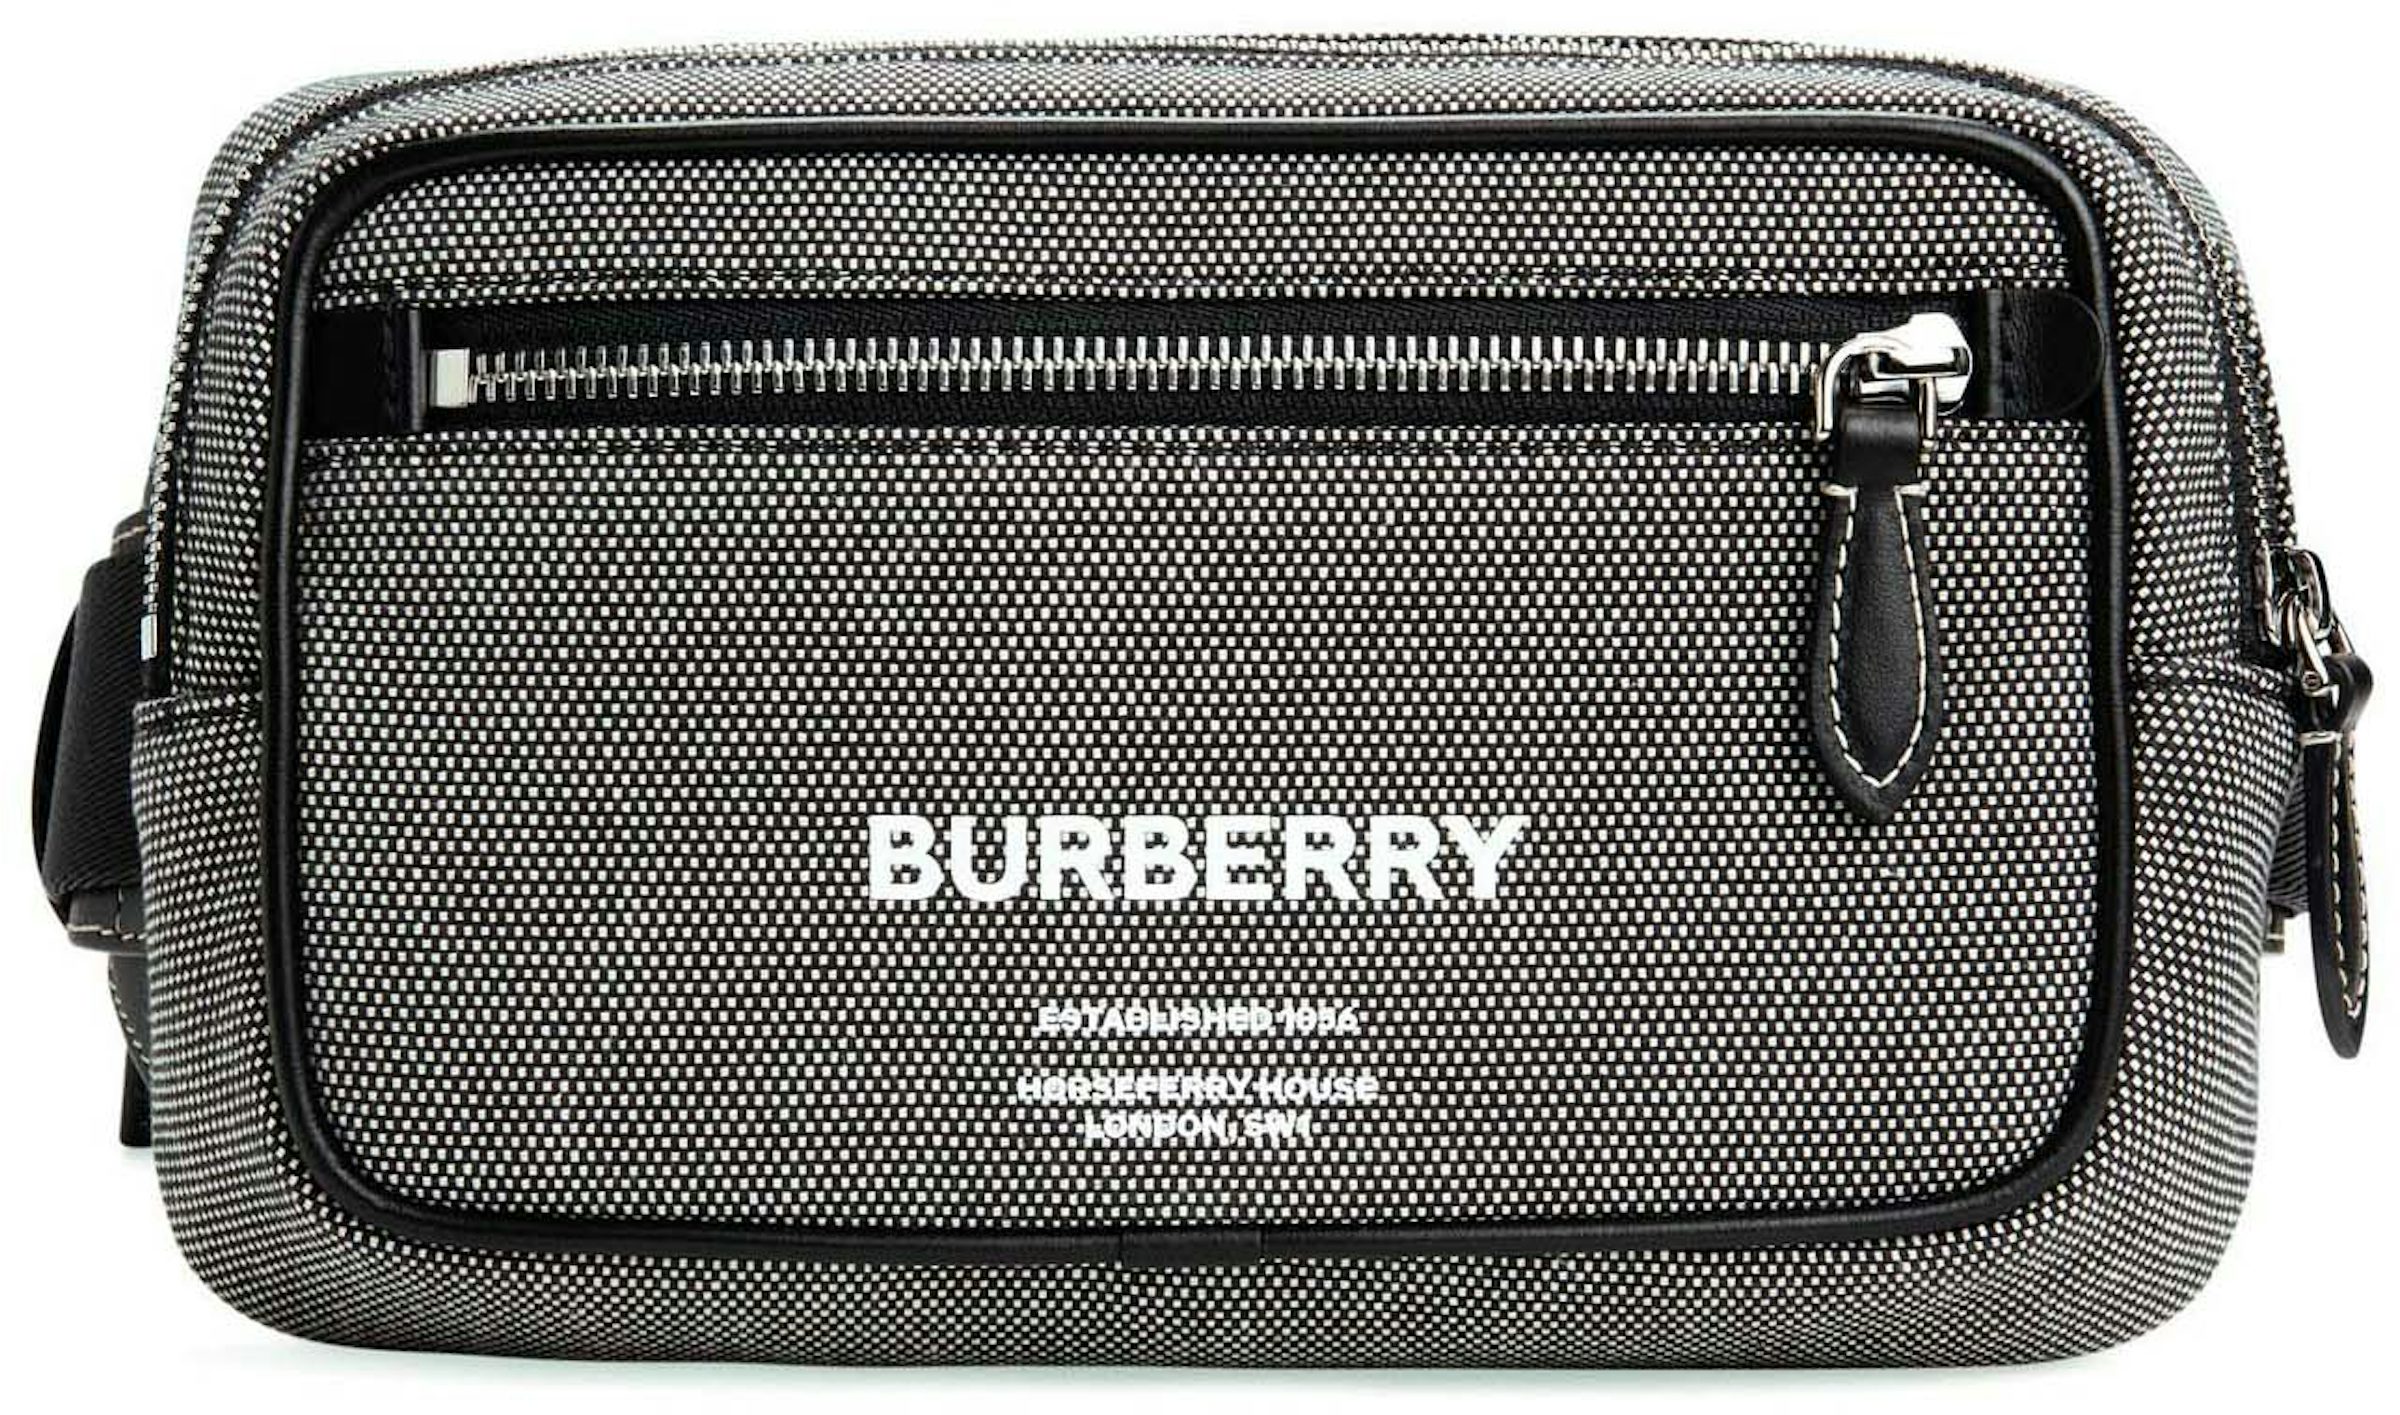 Burberry Birch Brown Canvas Check-Print Belt Bag Crossbody ~NEW